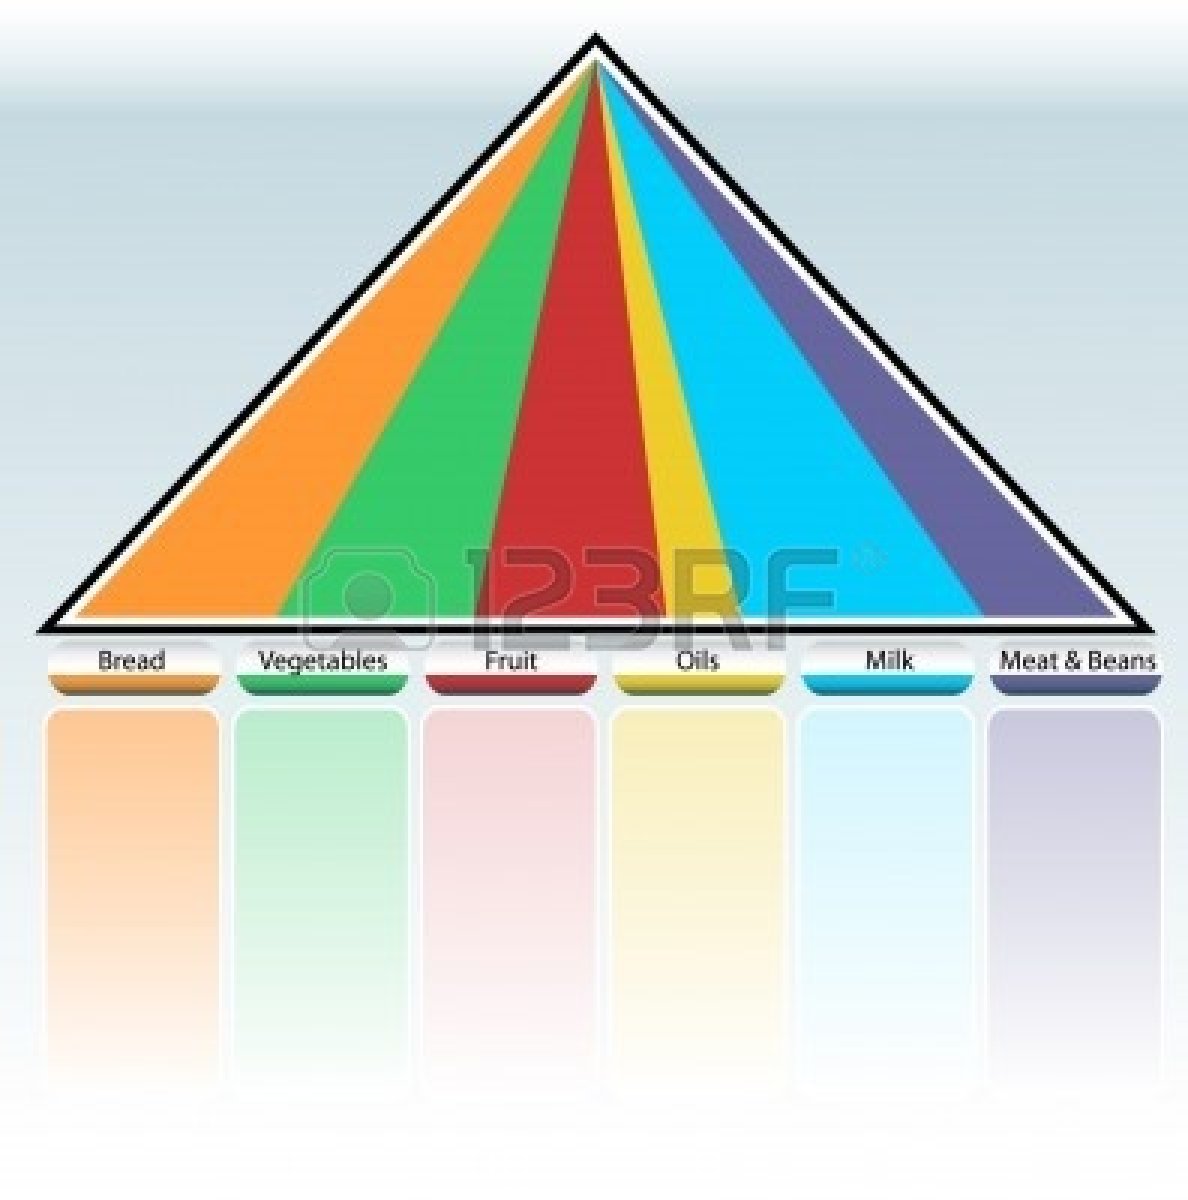 Food Pyramid Clip Art 7852736 An Image Of A Food Pyramid Table Jpg